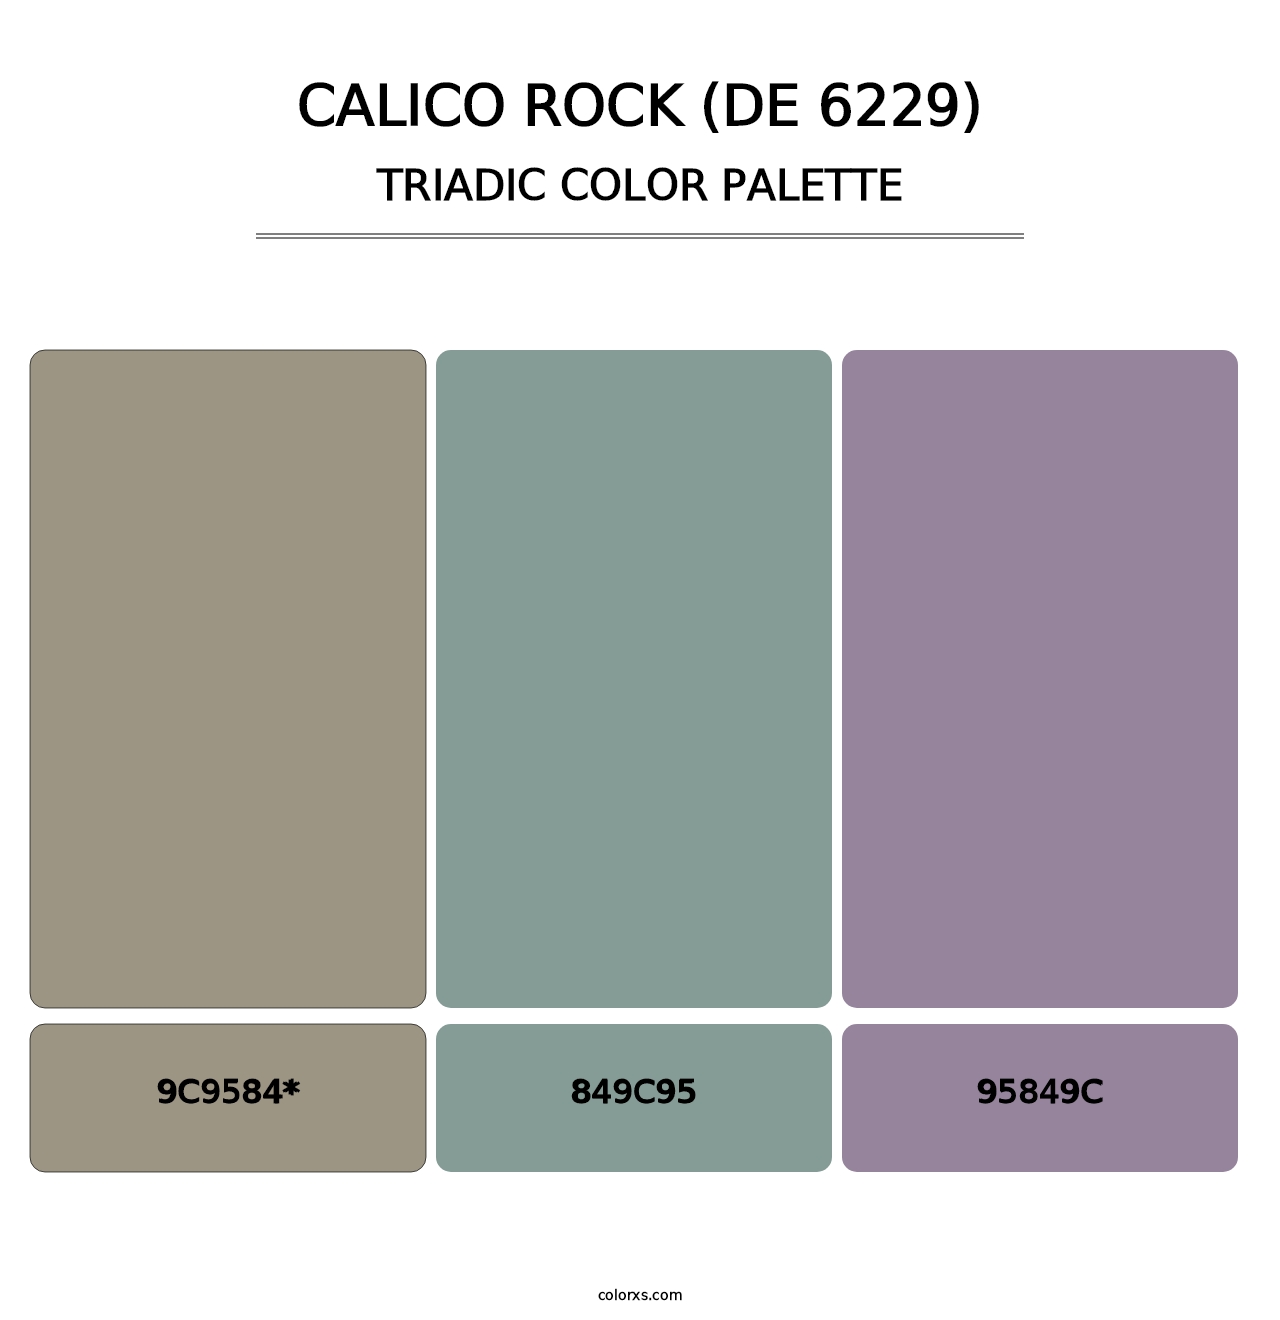 Calico Rock (DE 6229) - Triadic Color Palette